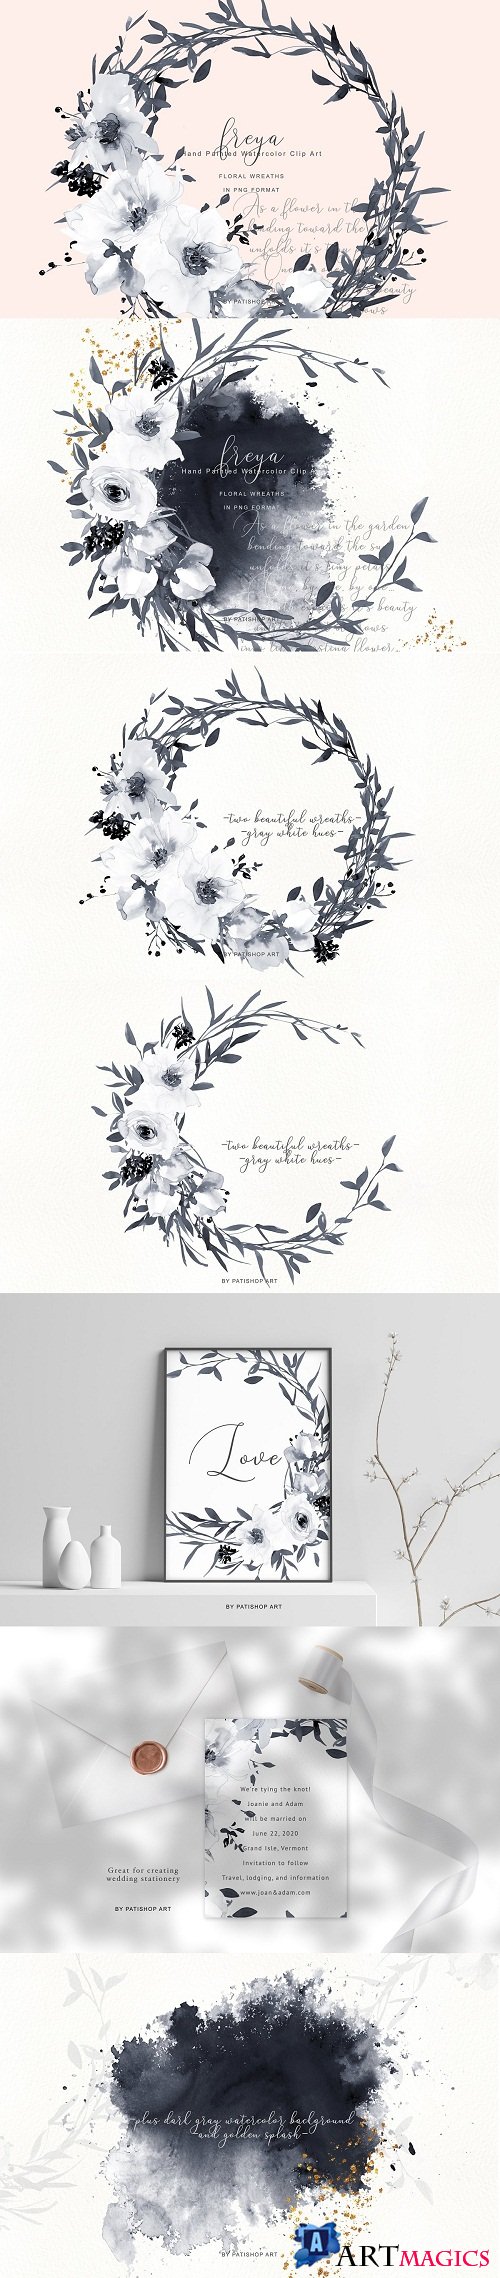 Gray & White Flowers Wreaths - 3784861